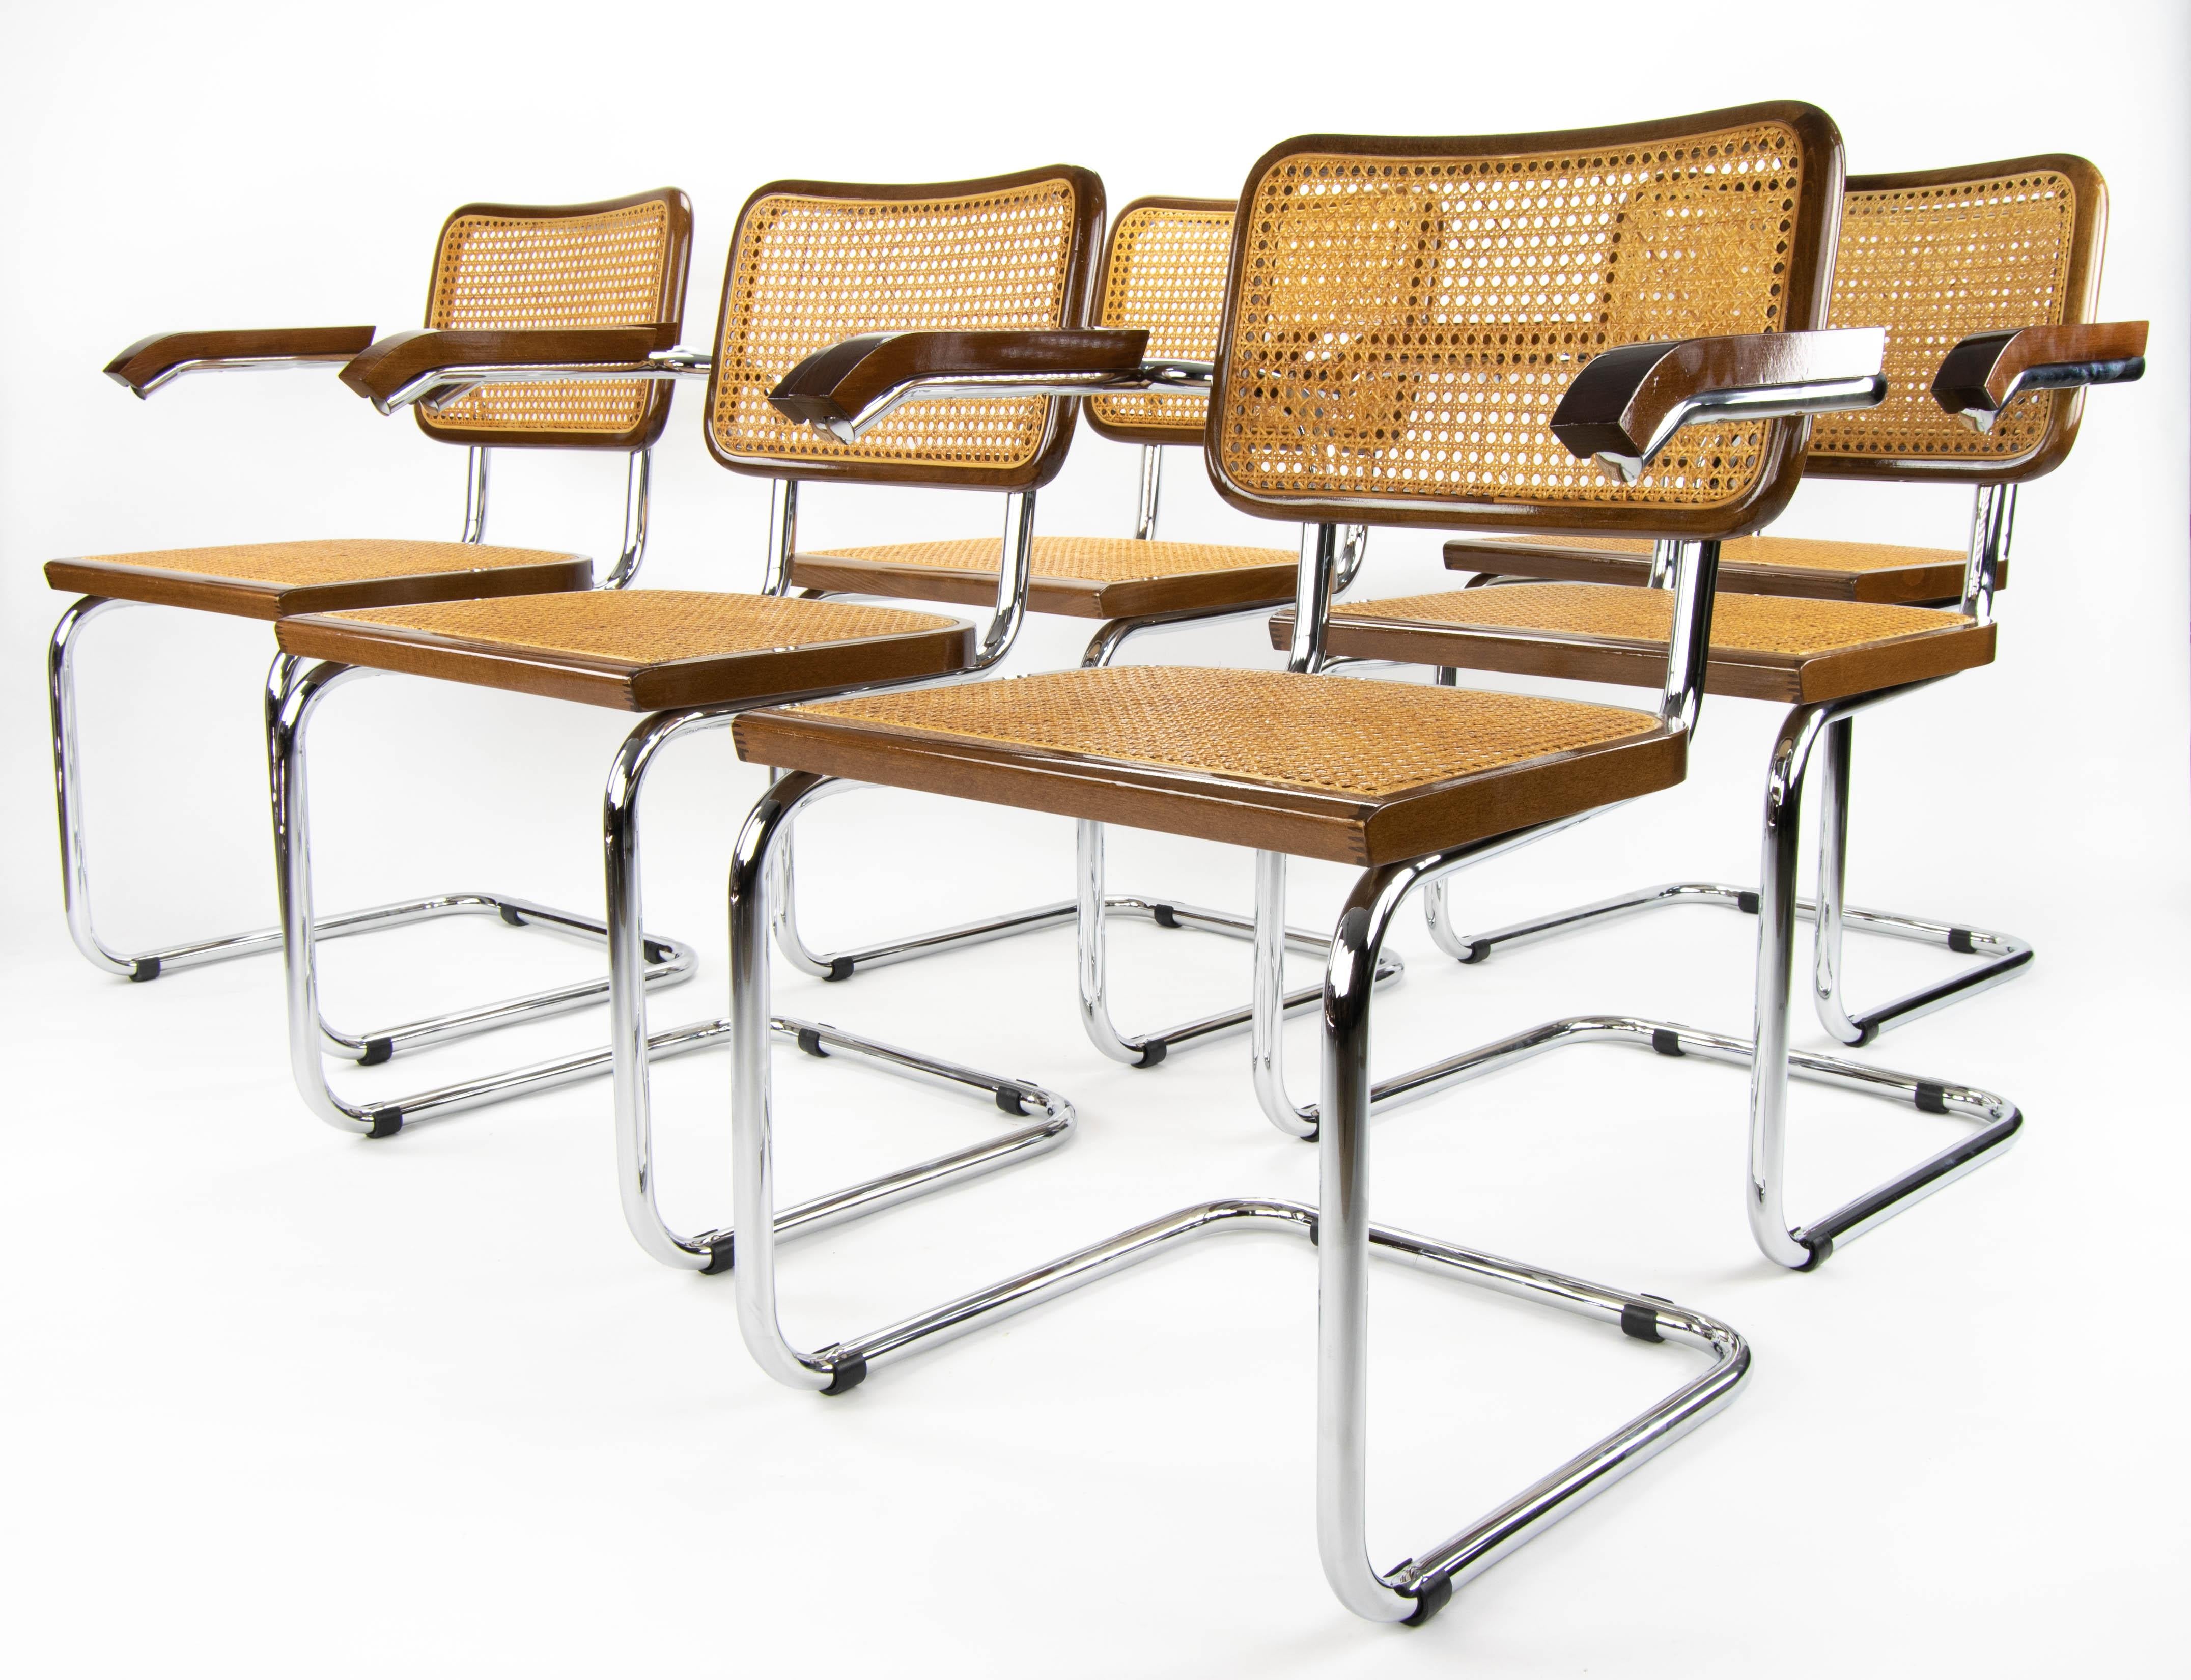 Italian Mid-Century Modern Chrome and Walnut Chairs by Marcel Breuer, Italy, 1970s